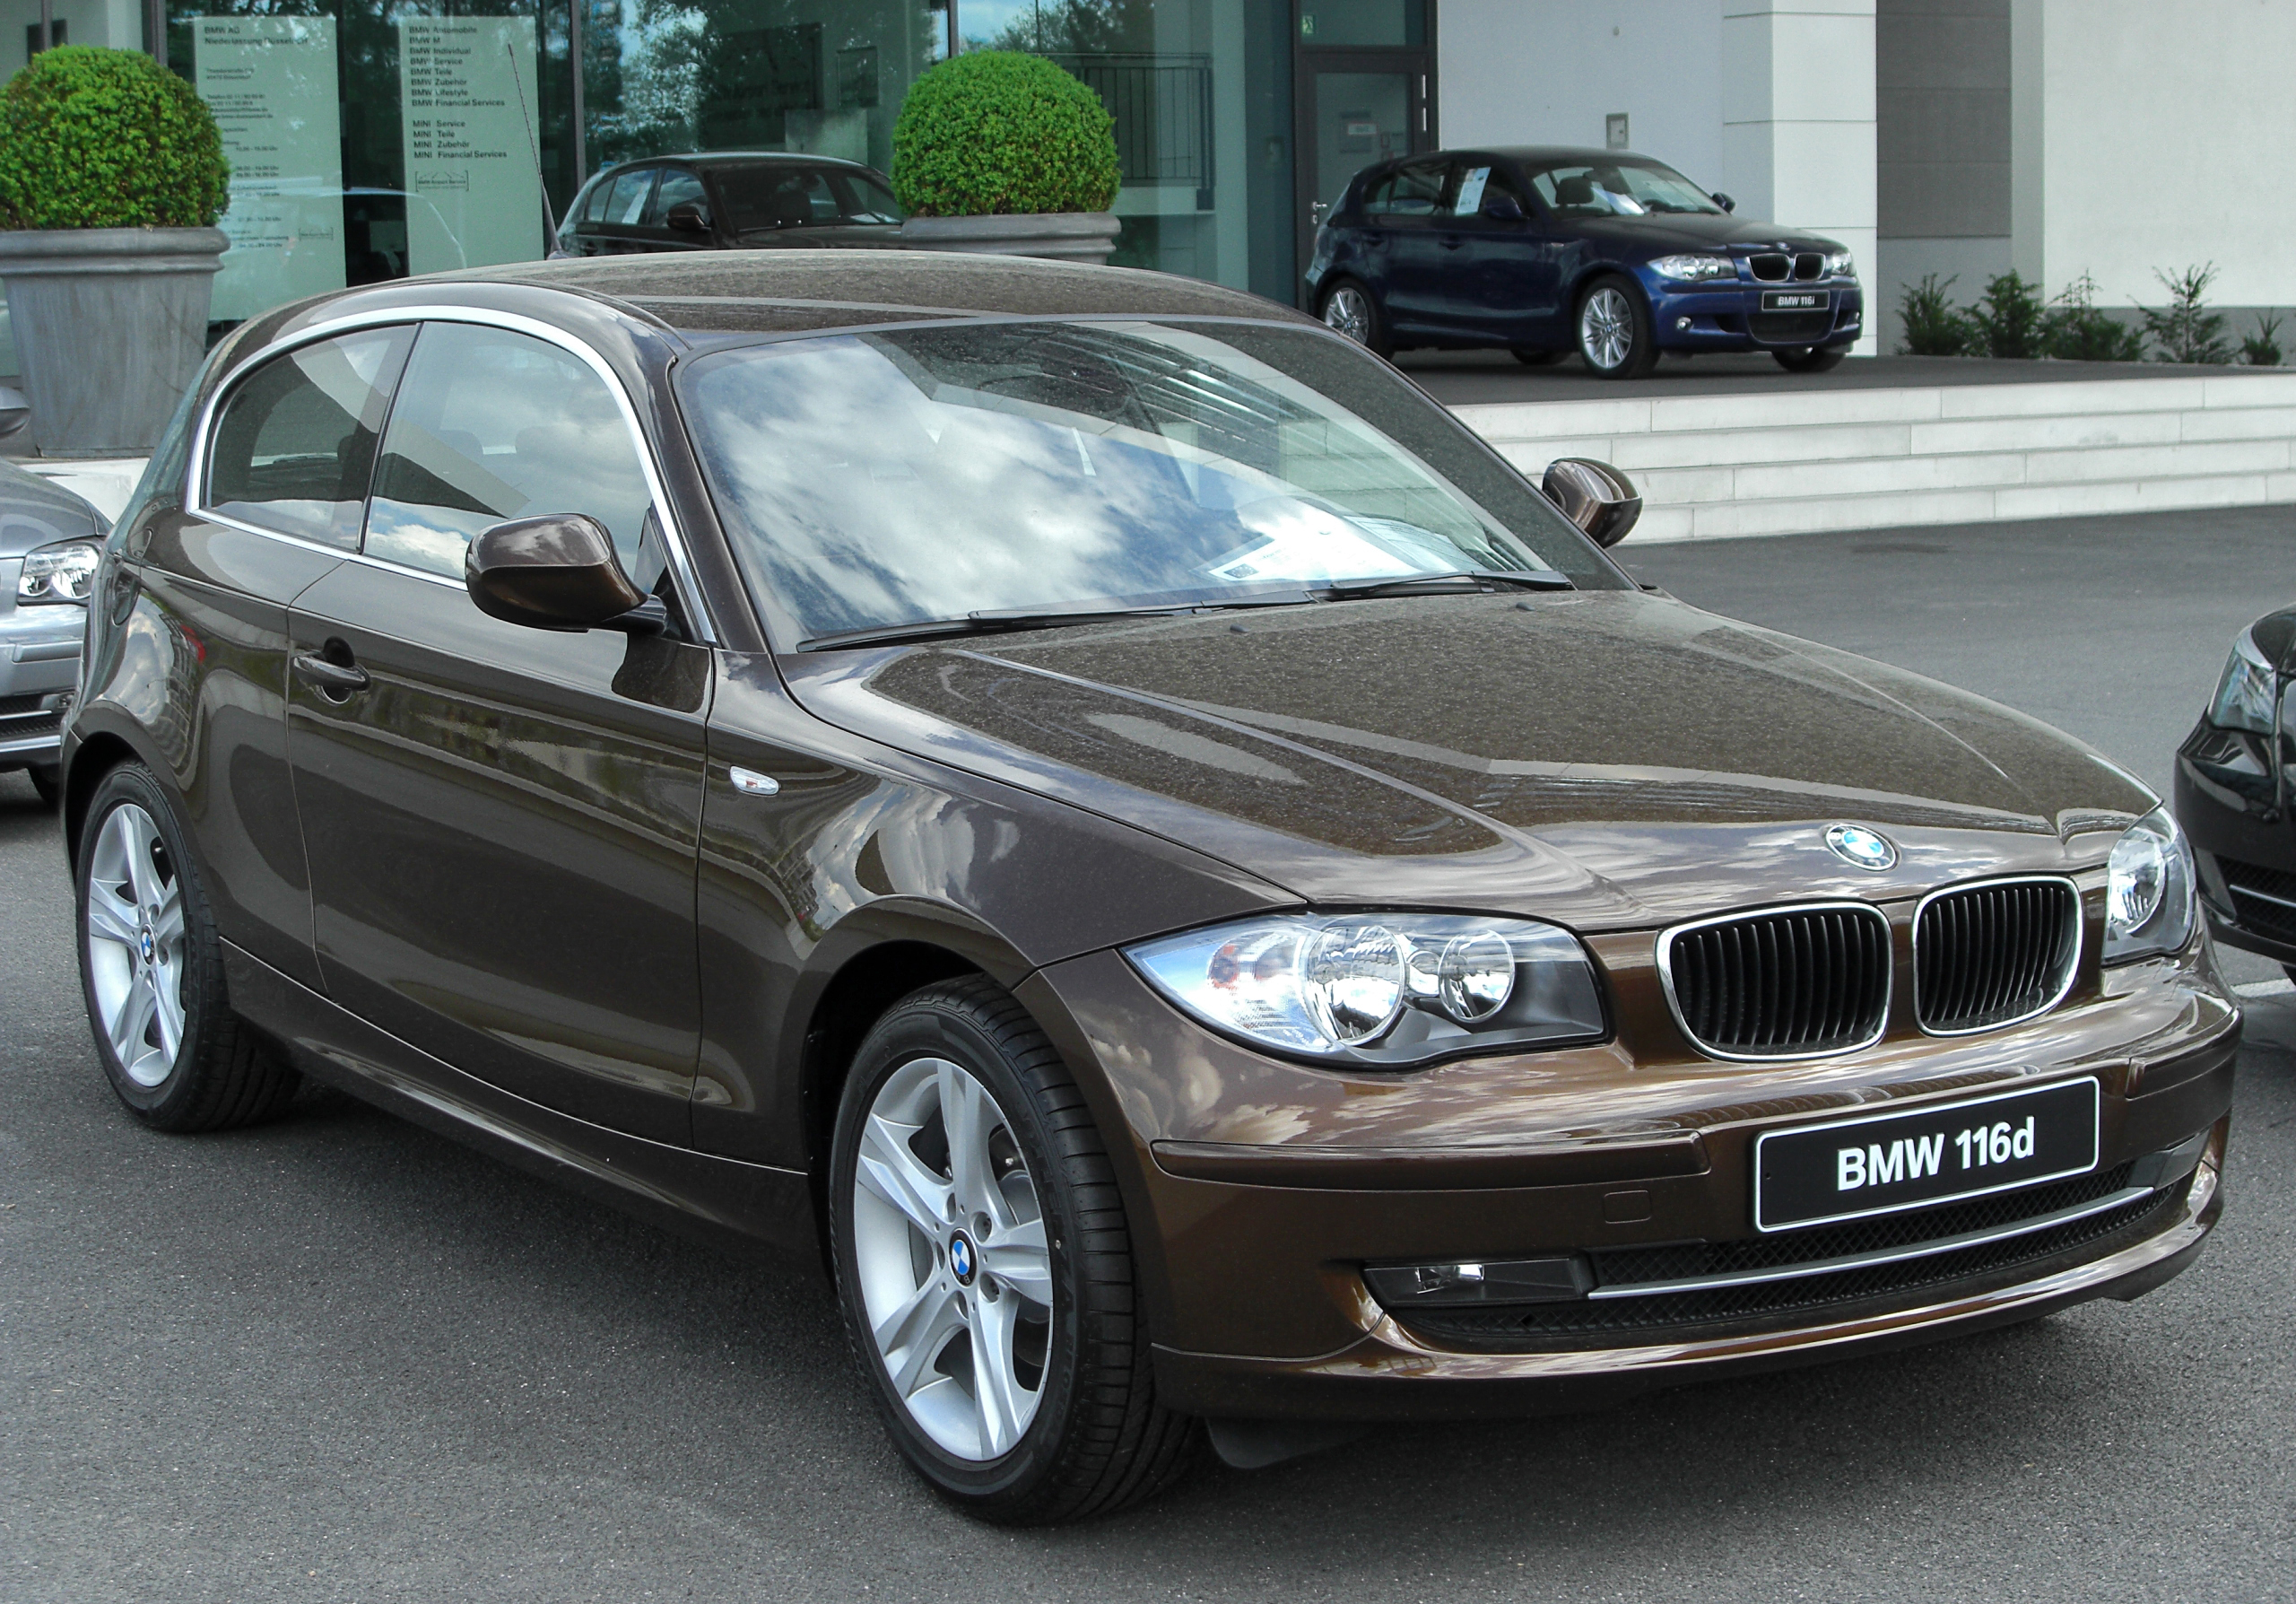 File:BMW 116d (E81) Facelift front 20100501.jpg